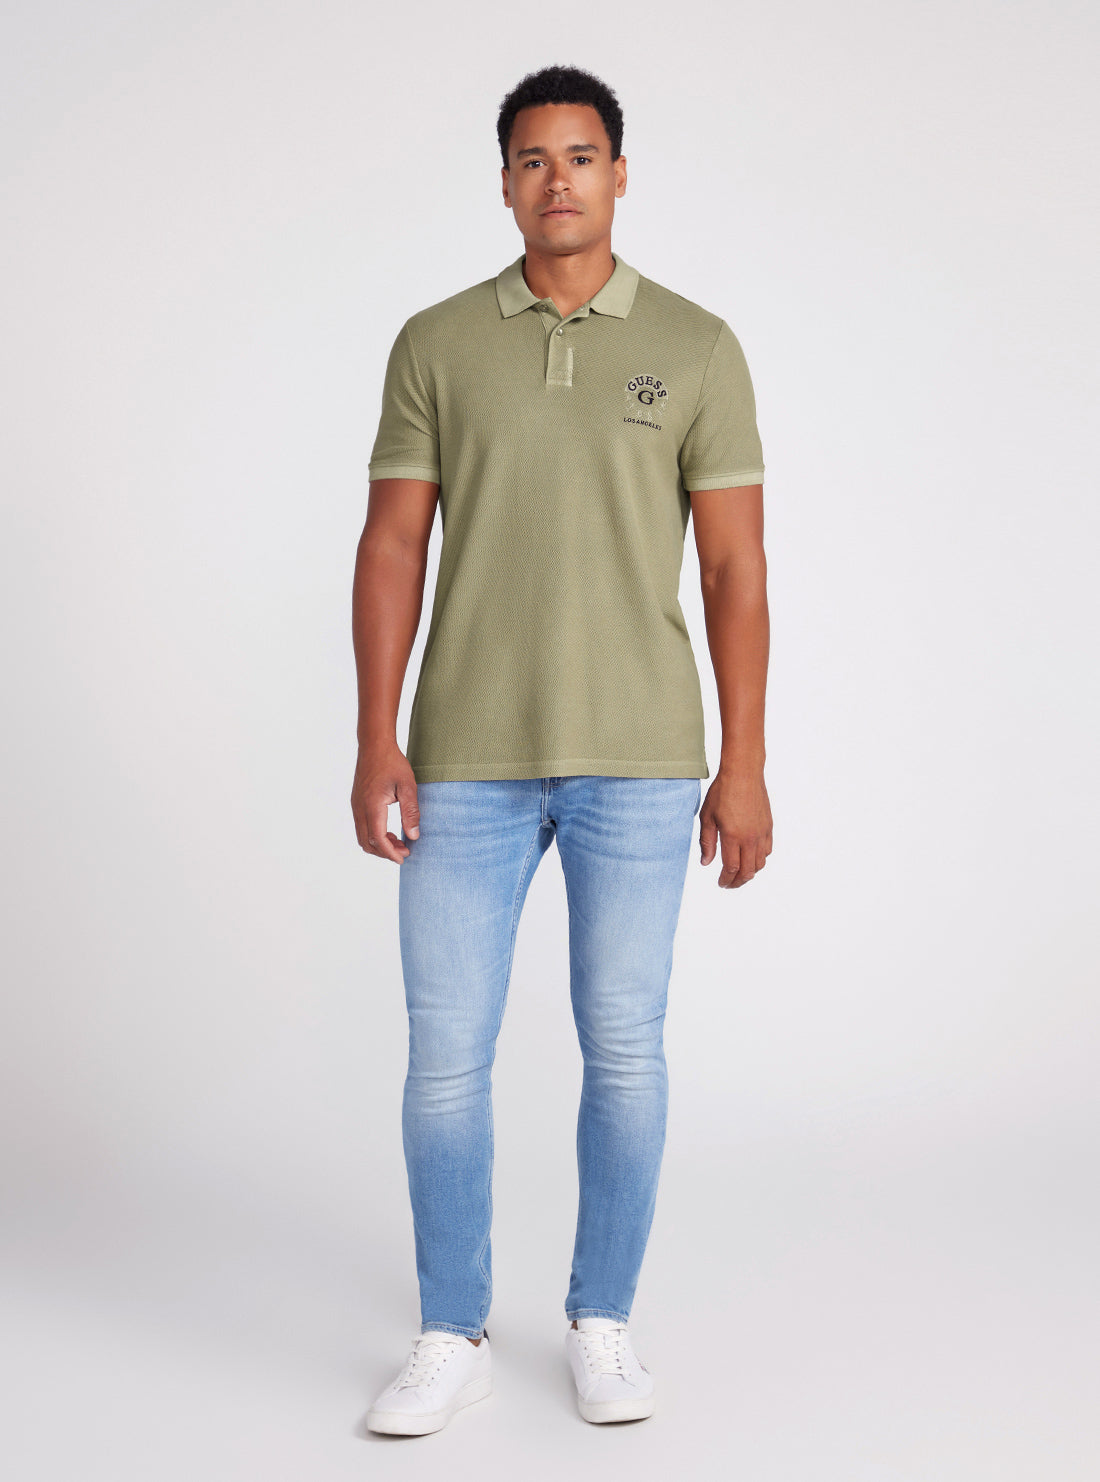 Green Ground Logo Polo T-Shirt | GUESS Men's Apparel | full view